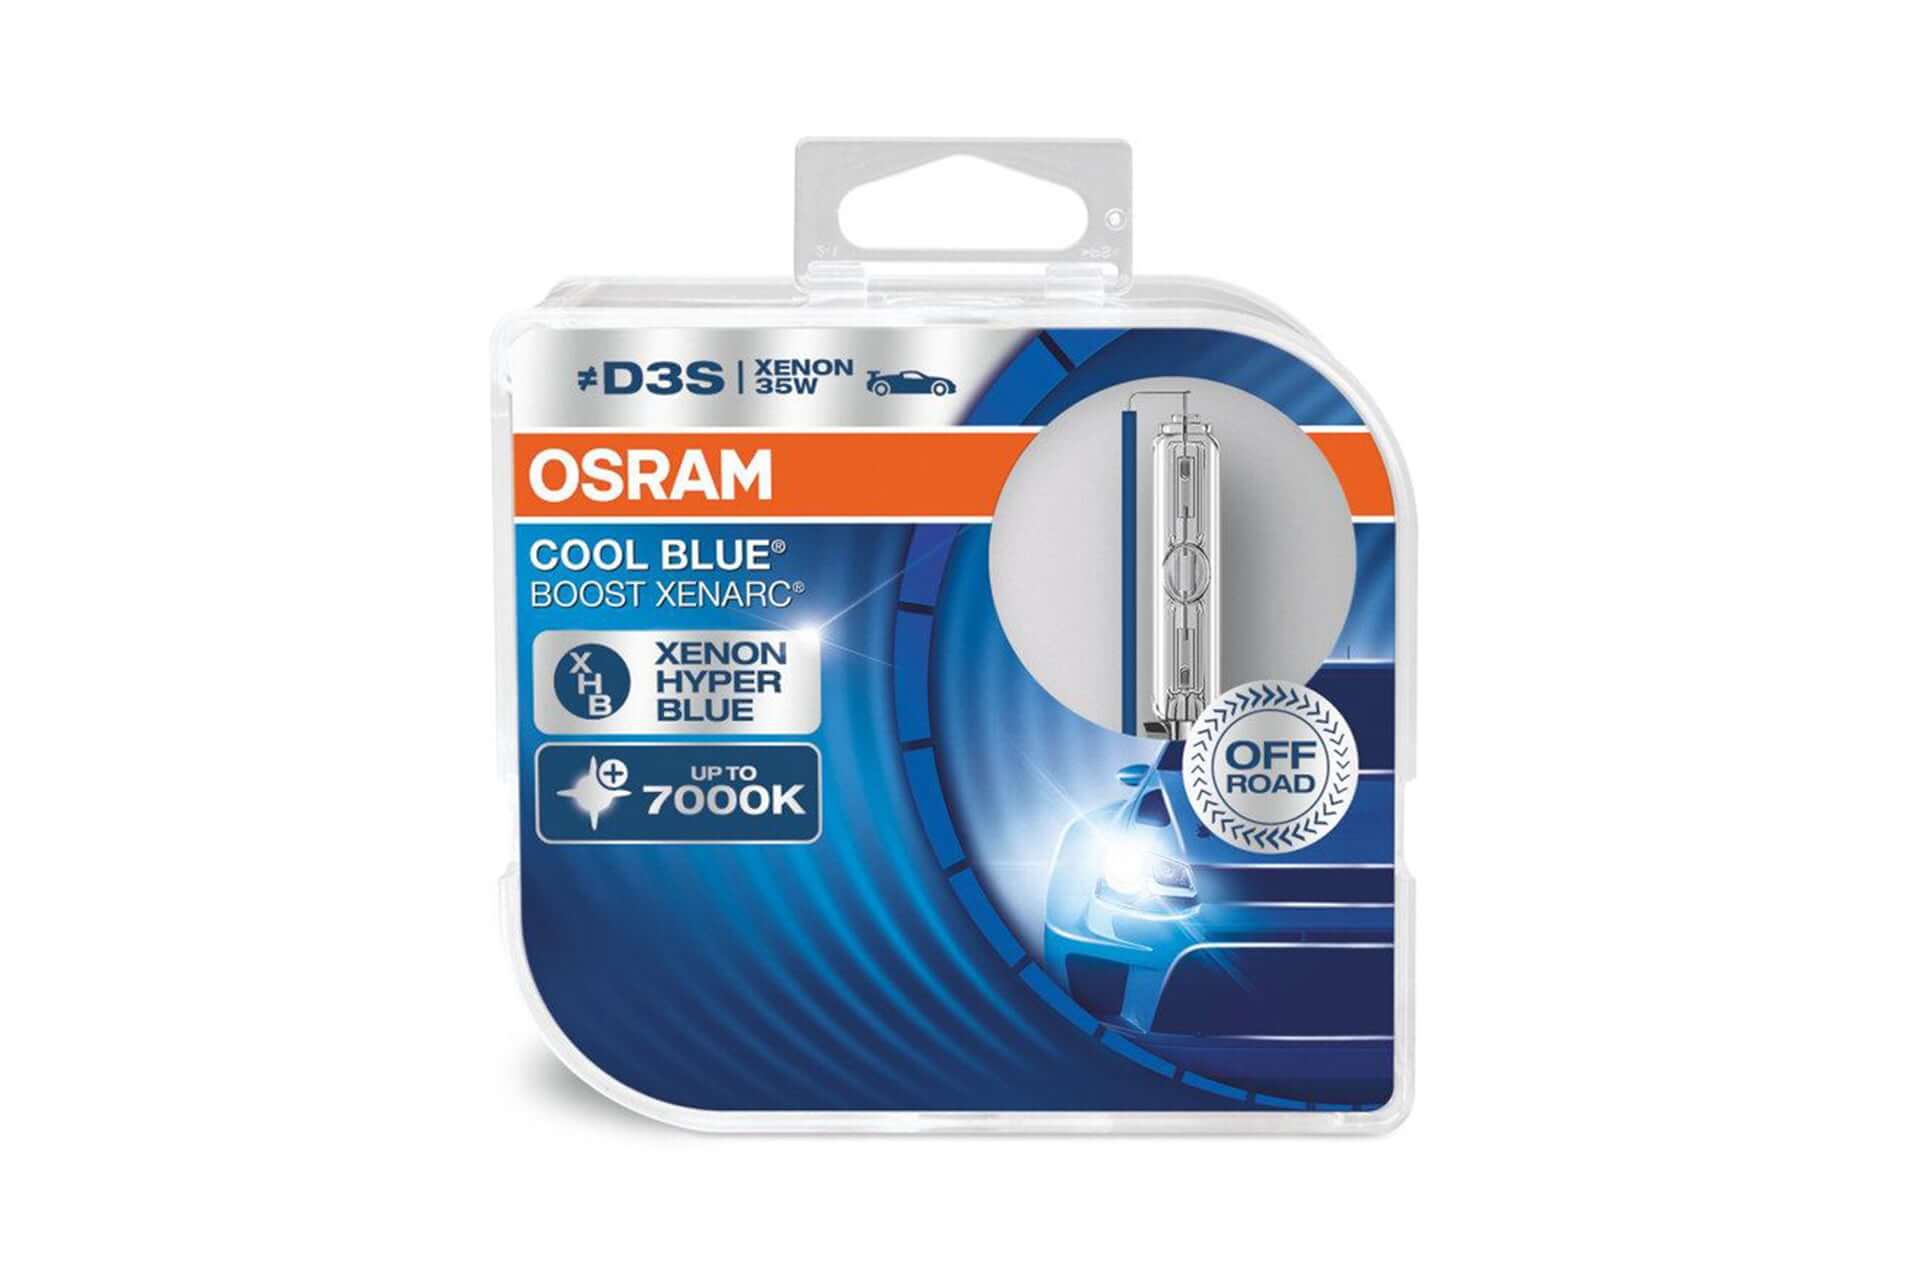 High quality Osram and budget D3S HID xenon bulbs